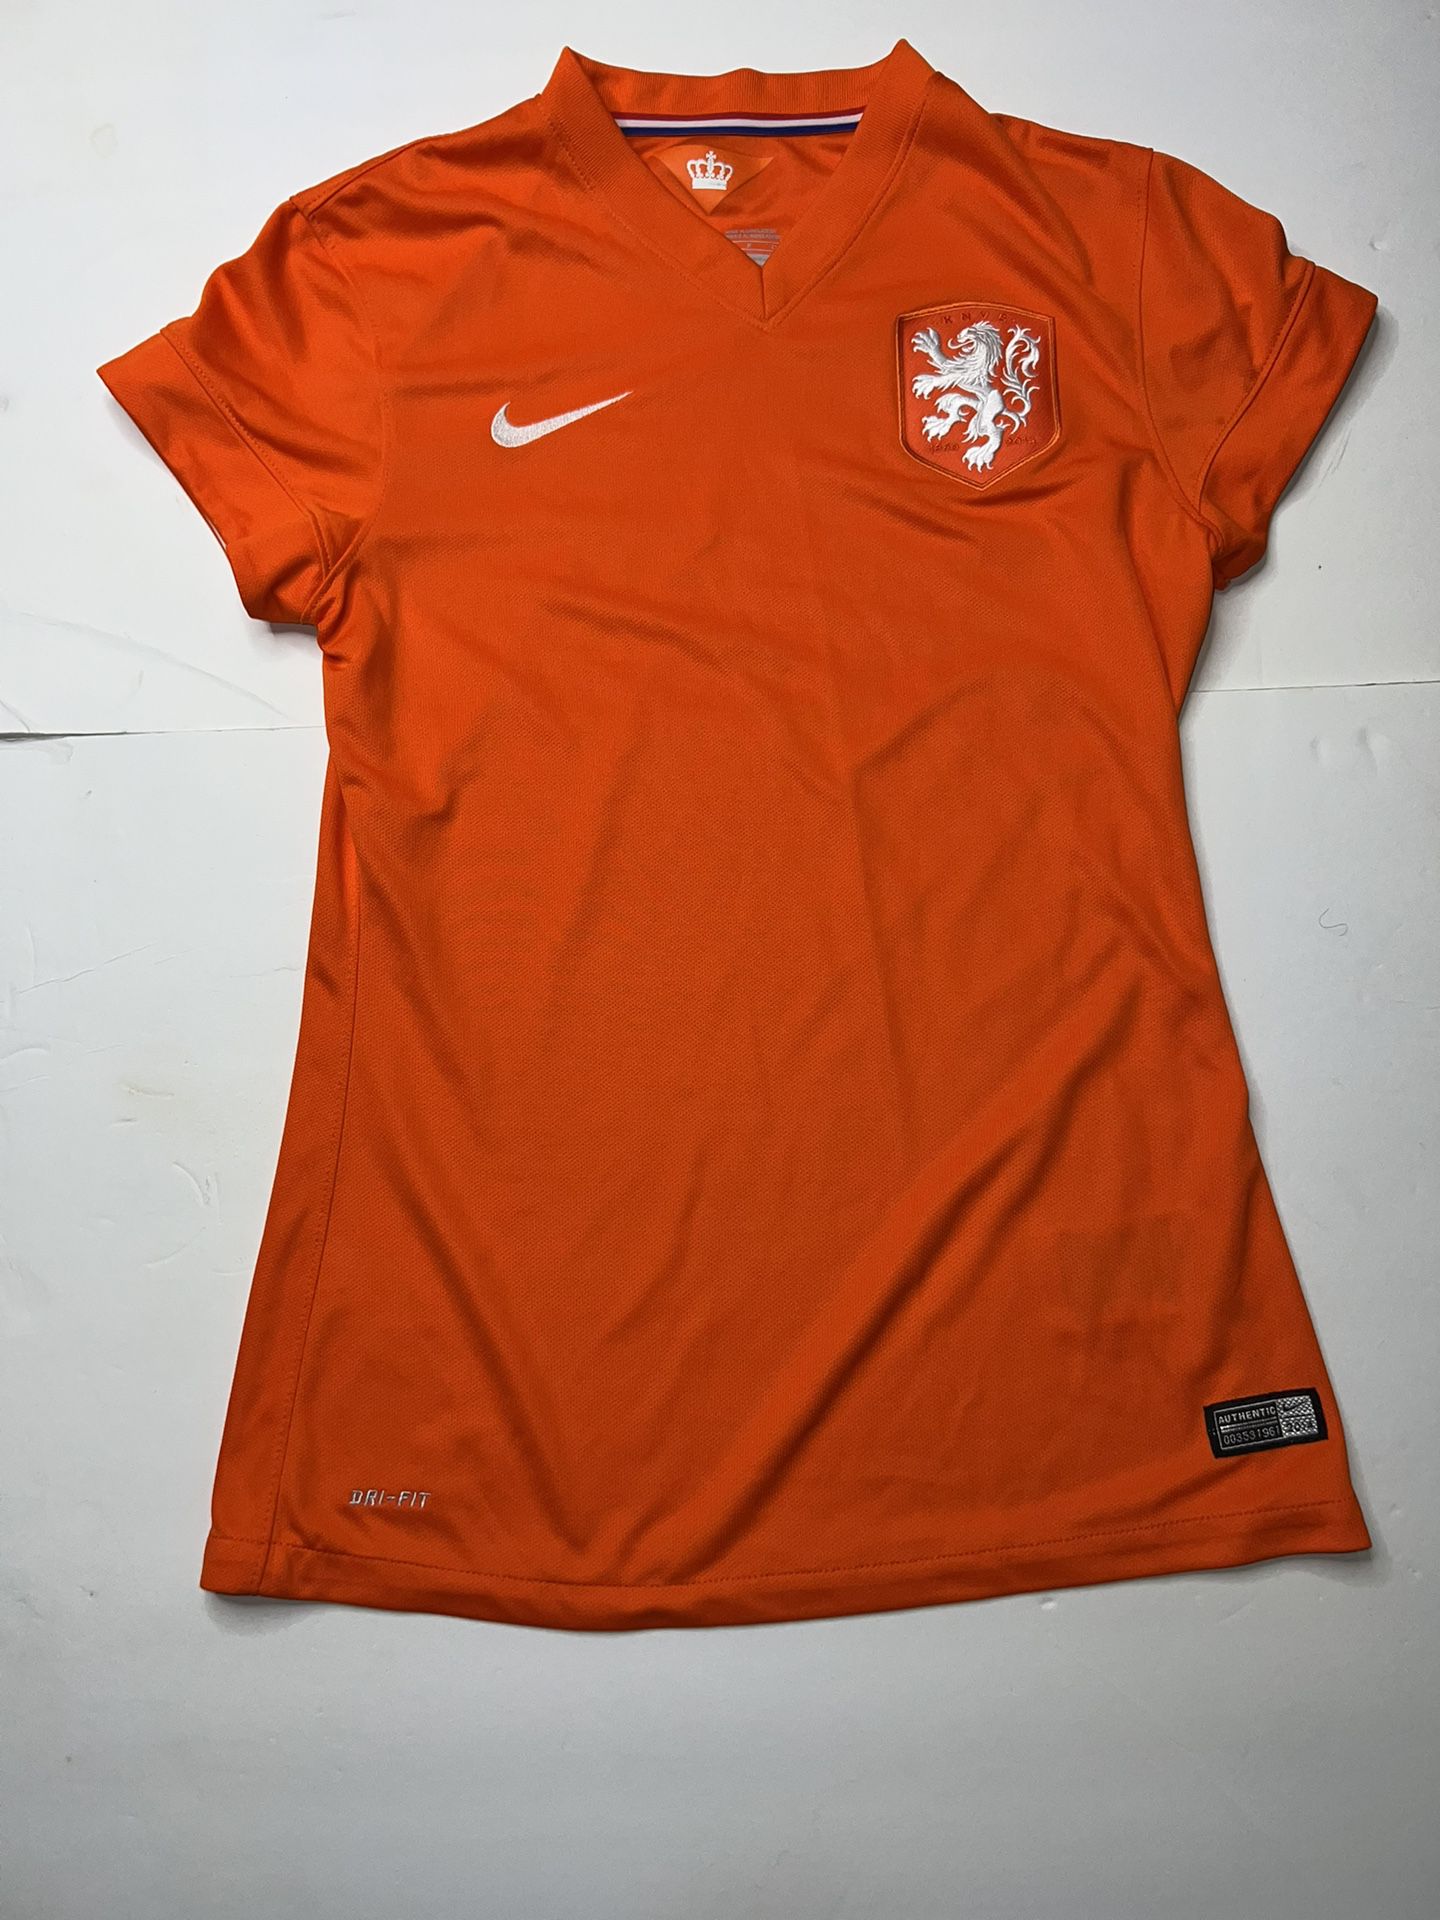 Vintage Nike Women Netherlands Holland Football Shirt Orange 2014 World Cup S